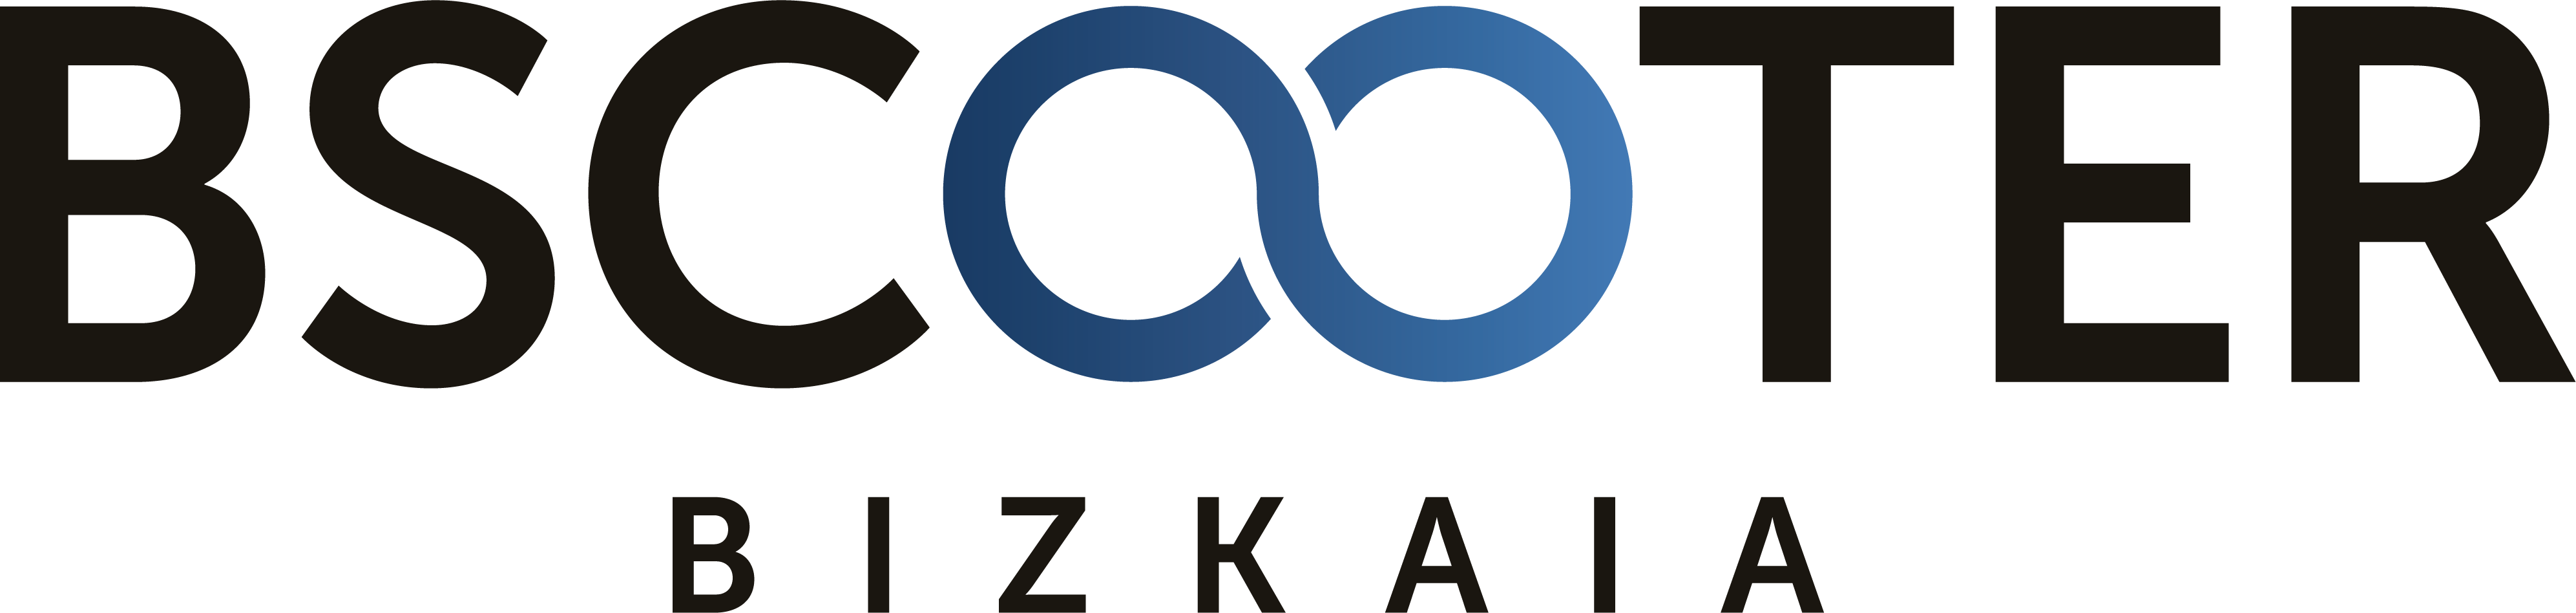 Logotipo BSCOOTER Bizkaia